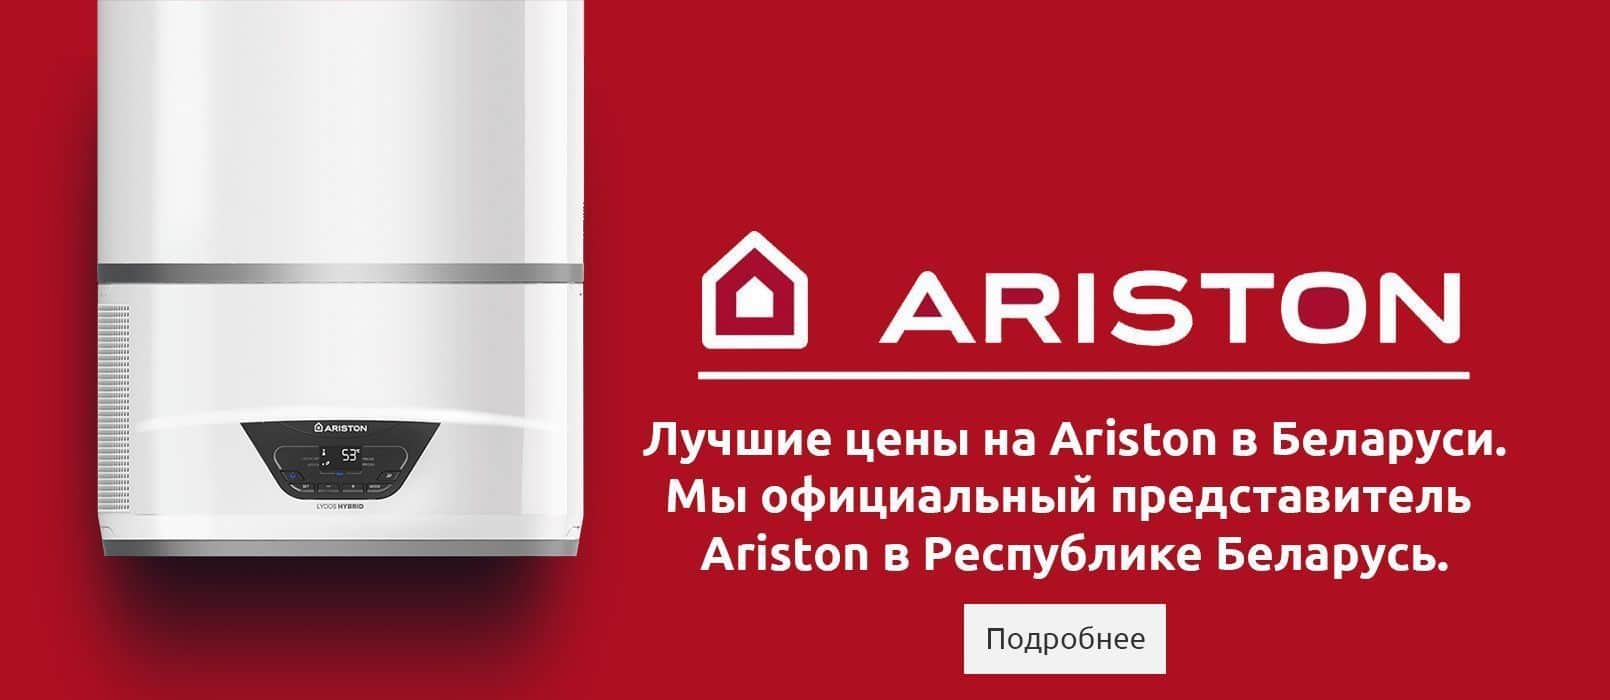 Ariston сервисные центры ariston help. Ariston водонагреватель reklama banner. Реклама Аристон. Котлы Аристон реклама. Ariston водонагреватели реклама.